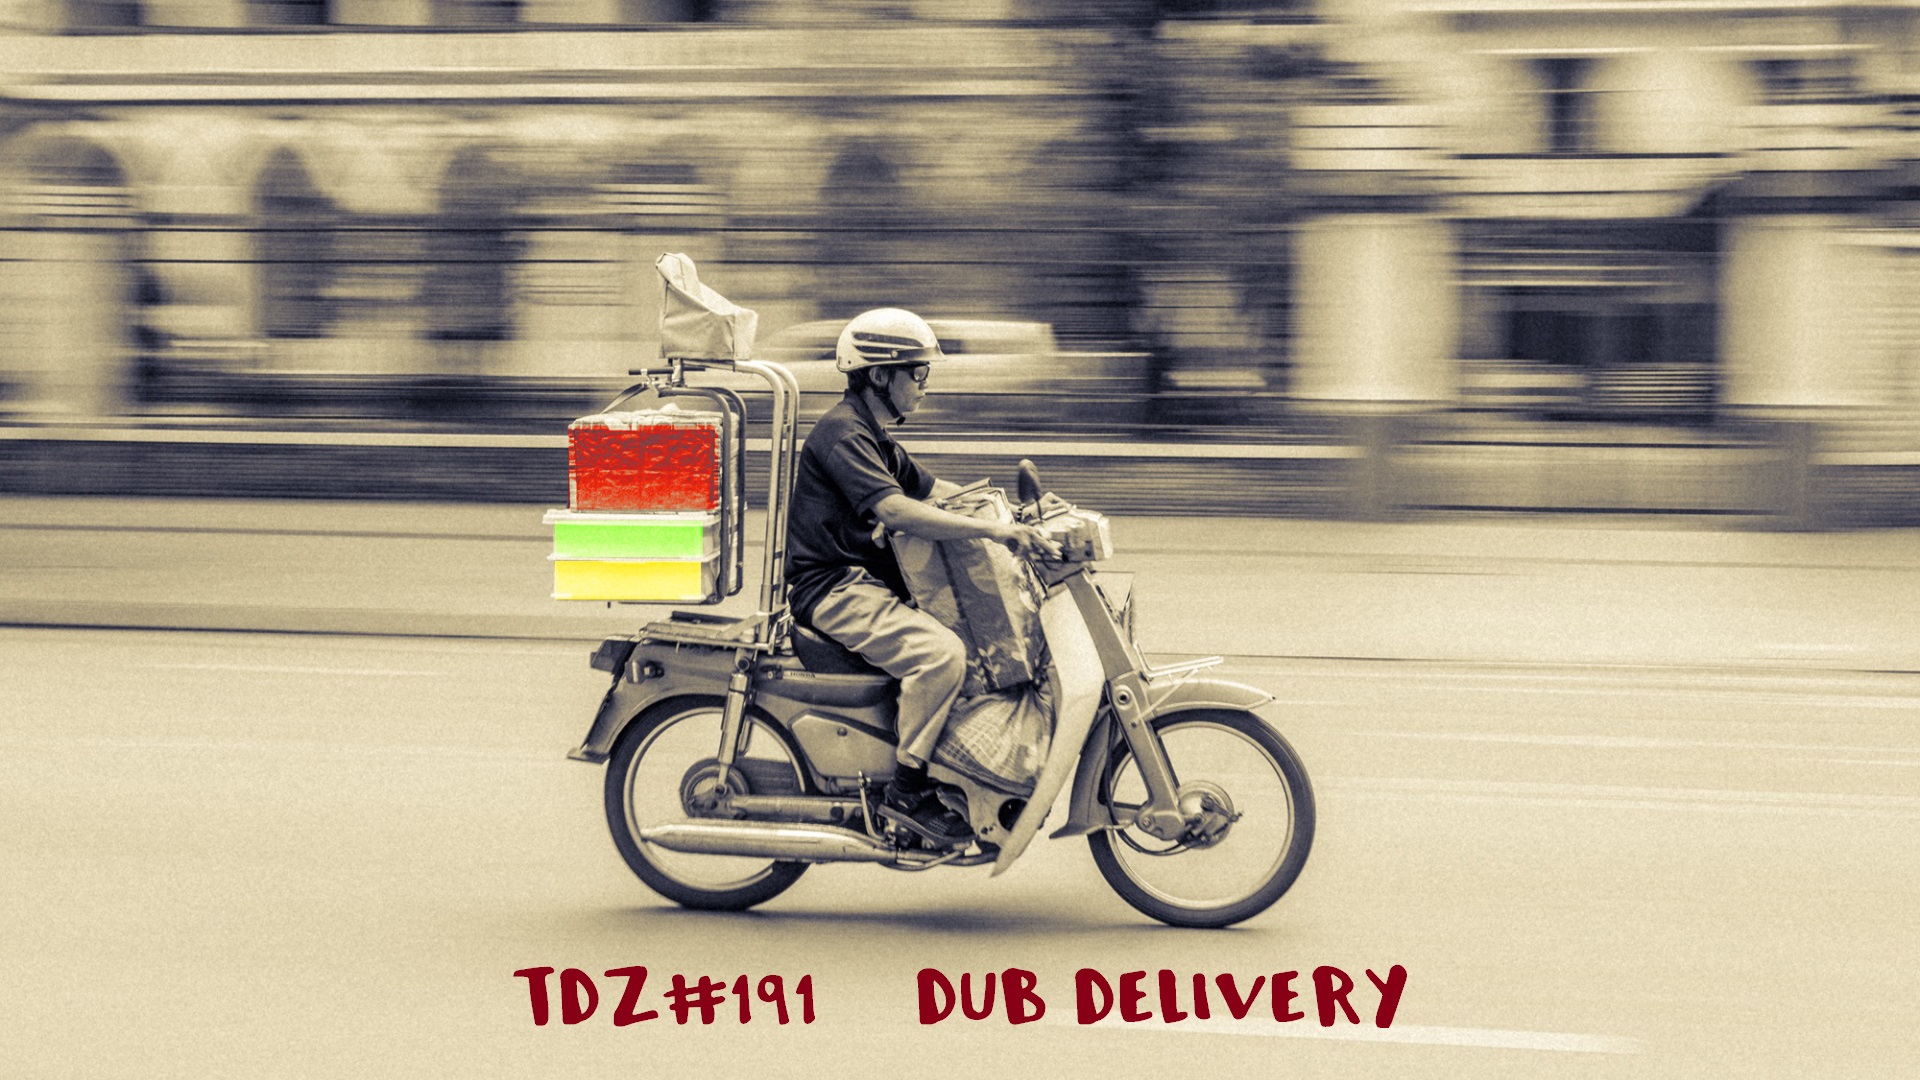 TDZ#191... Dub Delivery.....